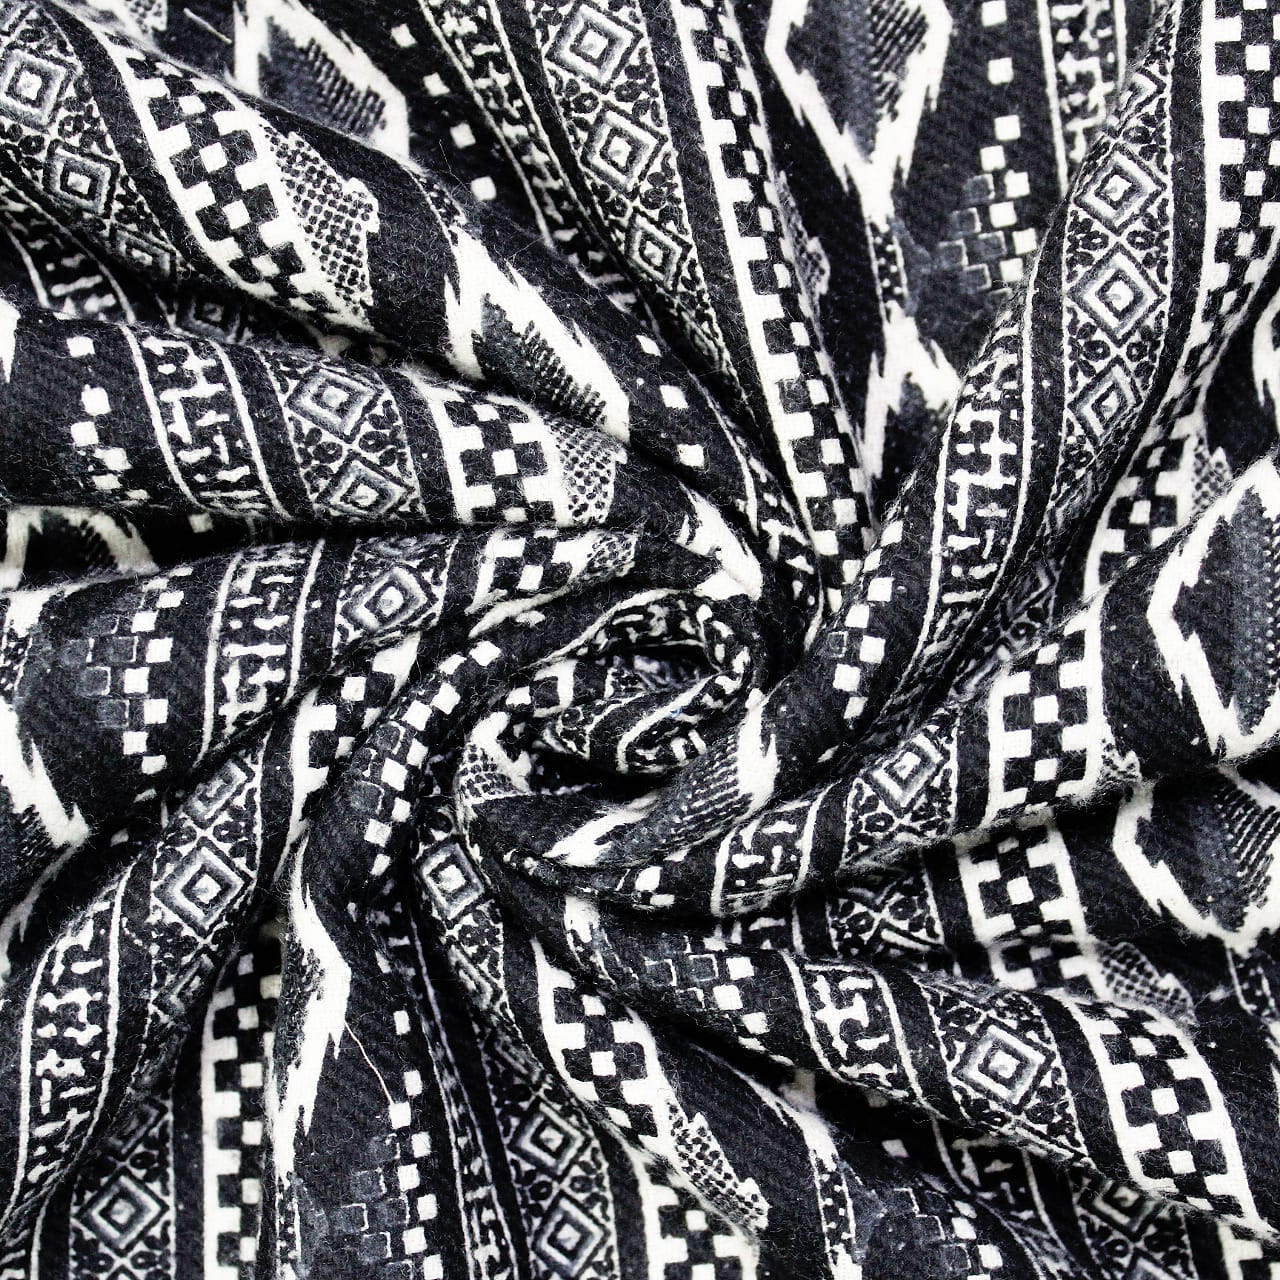 Cozy 3 layer Digital Print Cotton Flannel Blanket In Black Online At Best prices